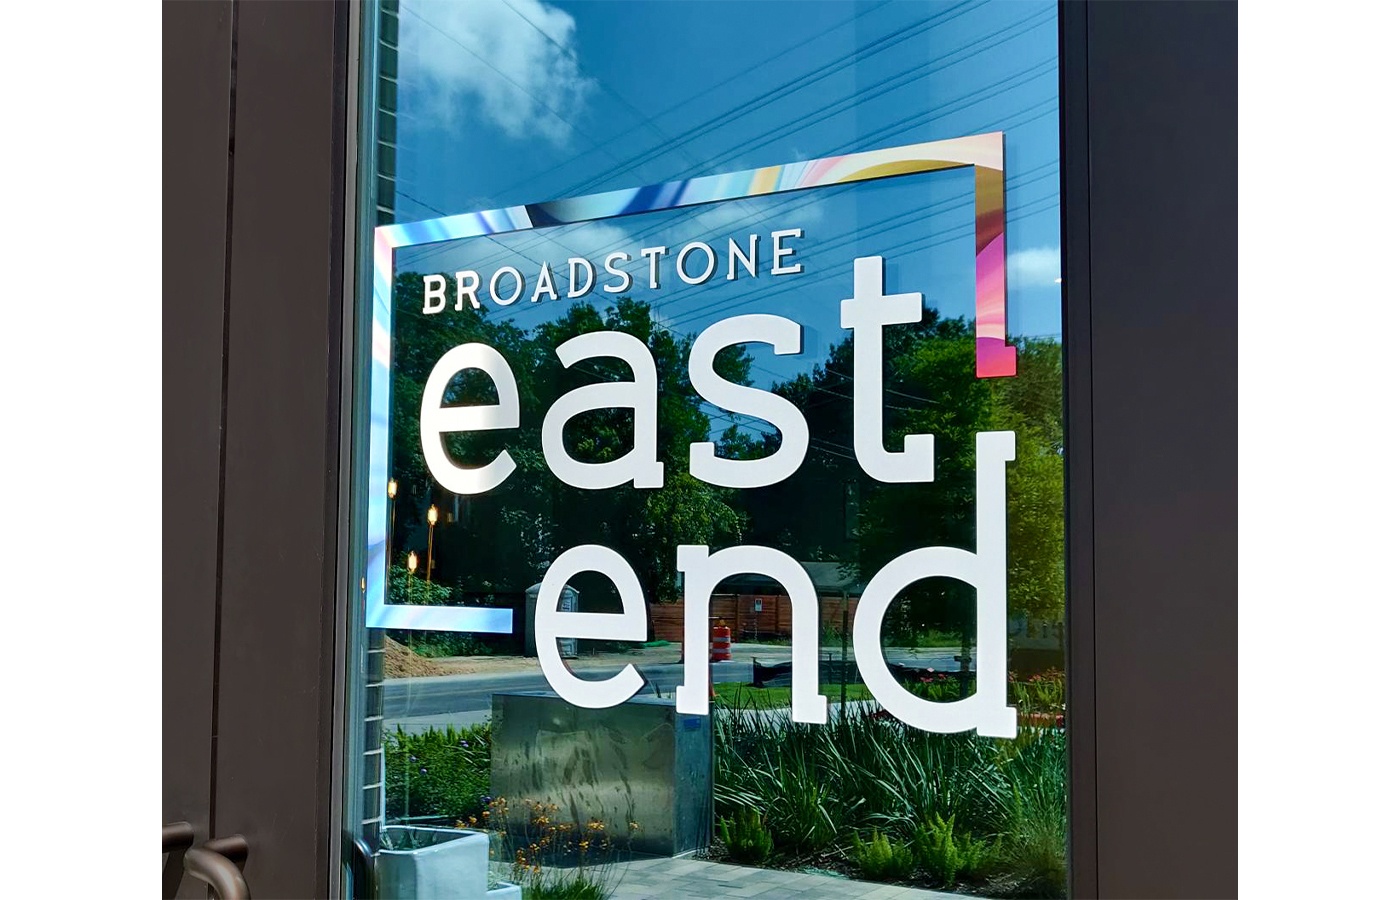 Broadstone East End